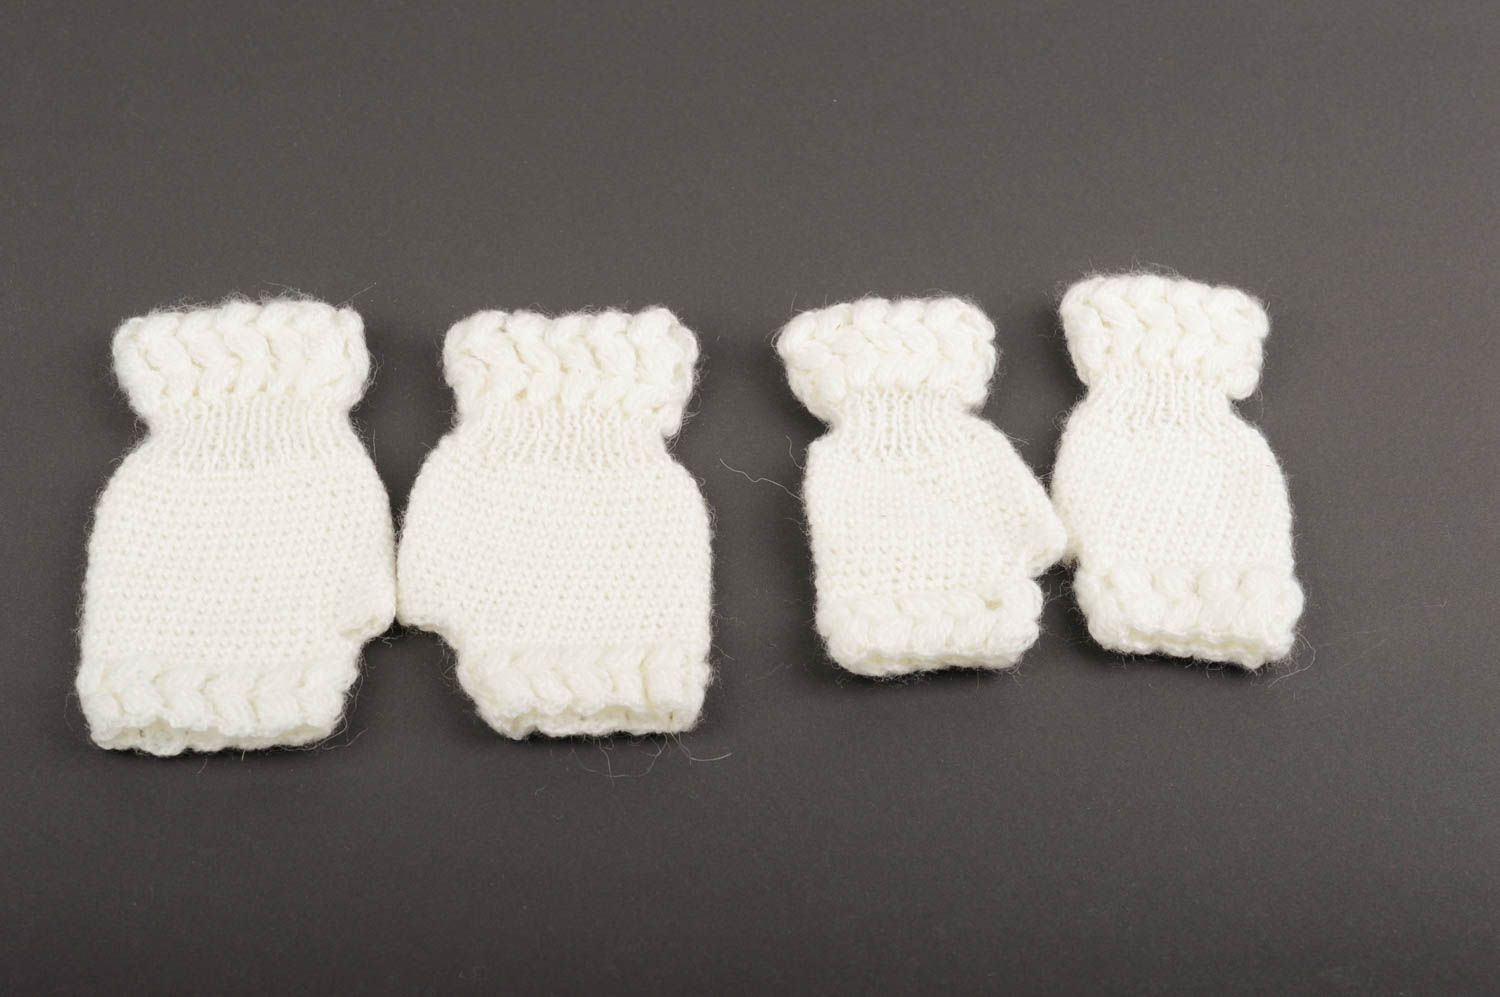 Handmade white crocheted mitts 2 stylish festive mitts beautiful accessories photo 1